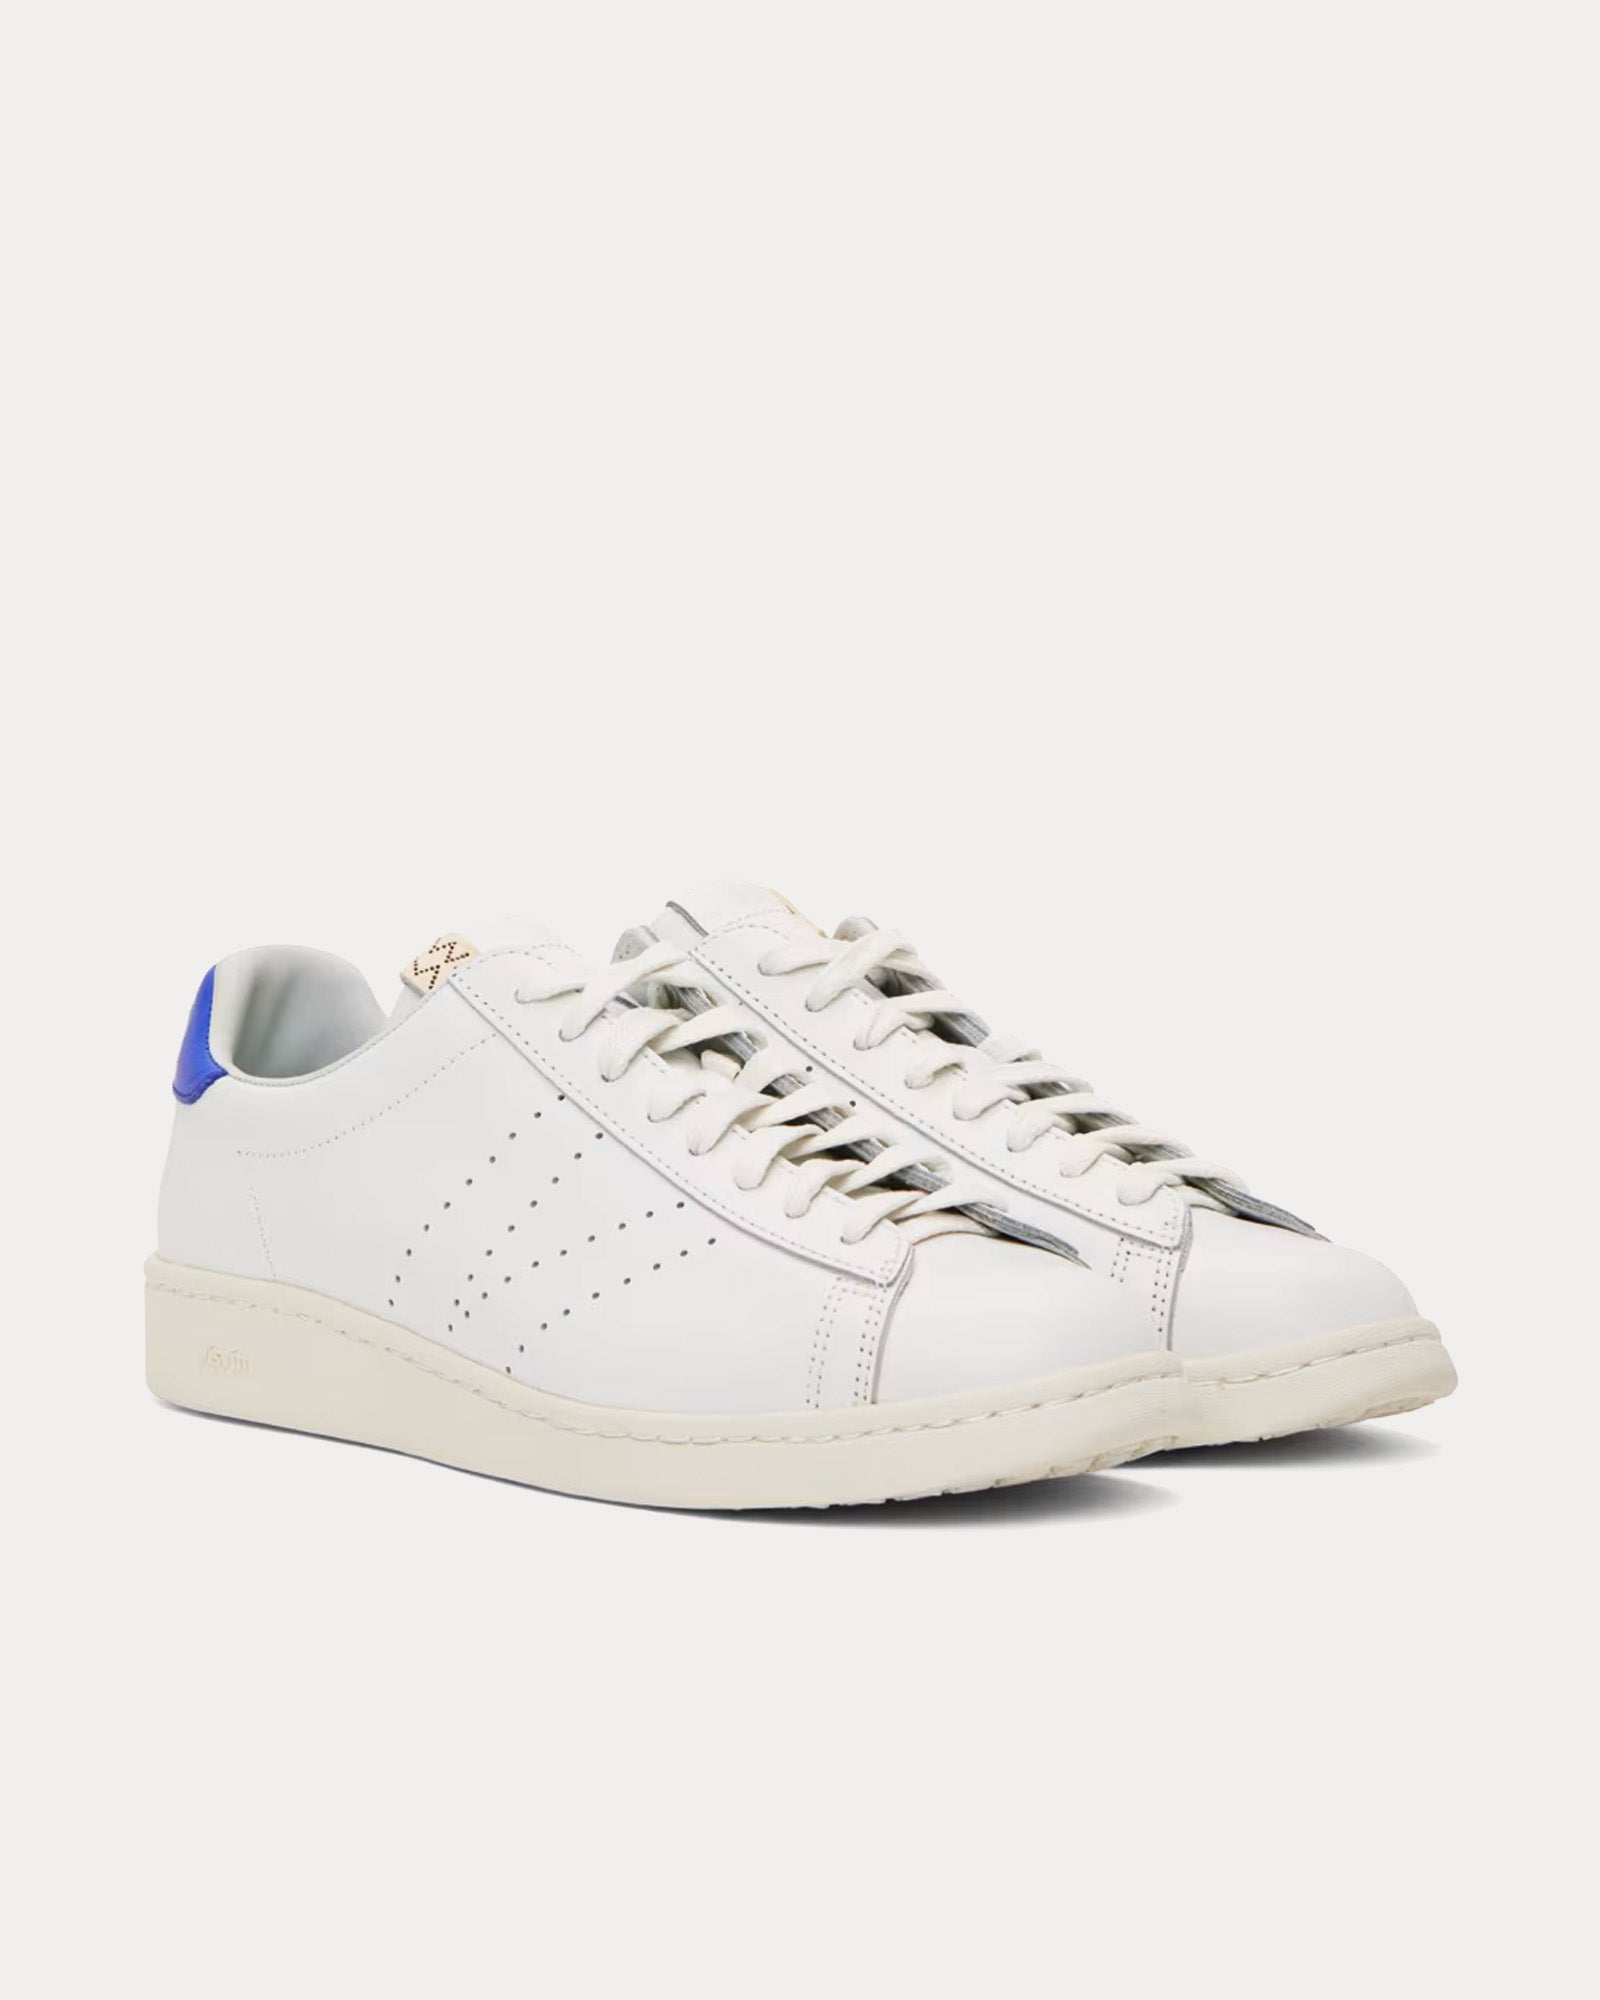 Visvim - Corda Folk White / Blue Low Top Sneakers